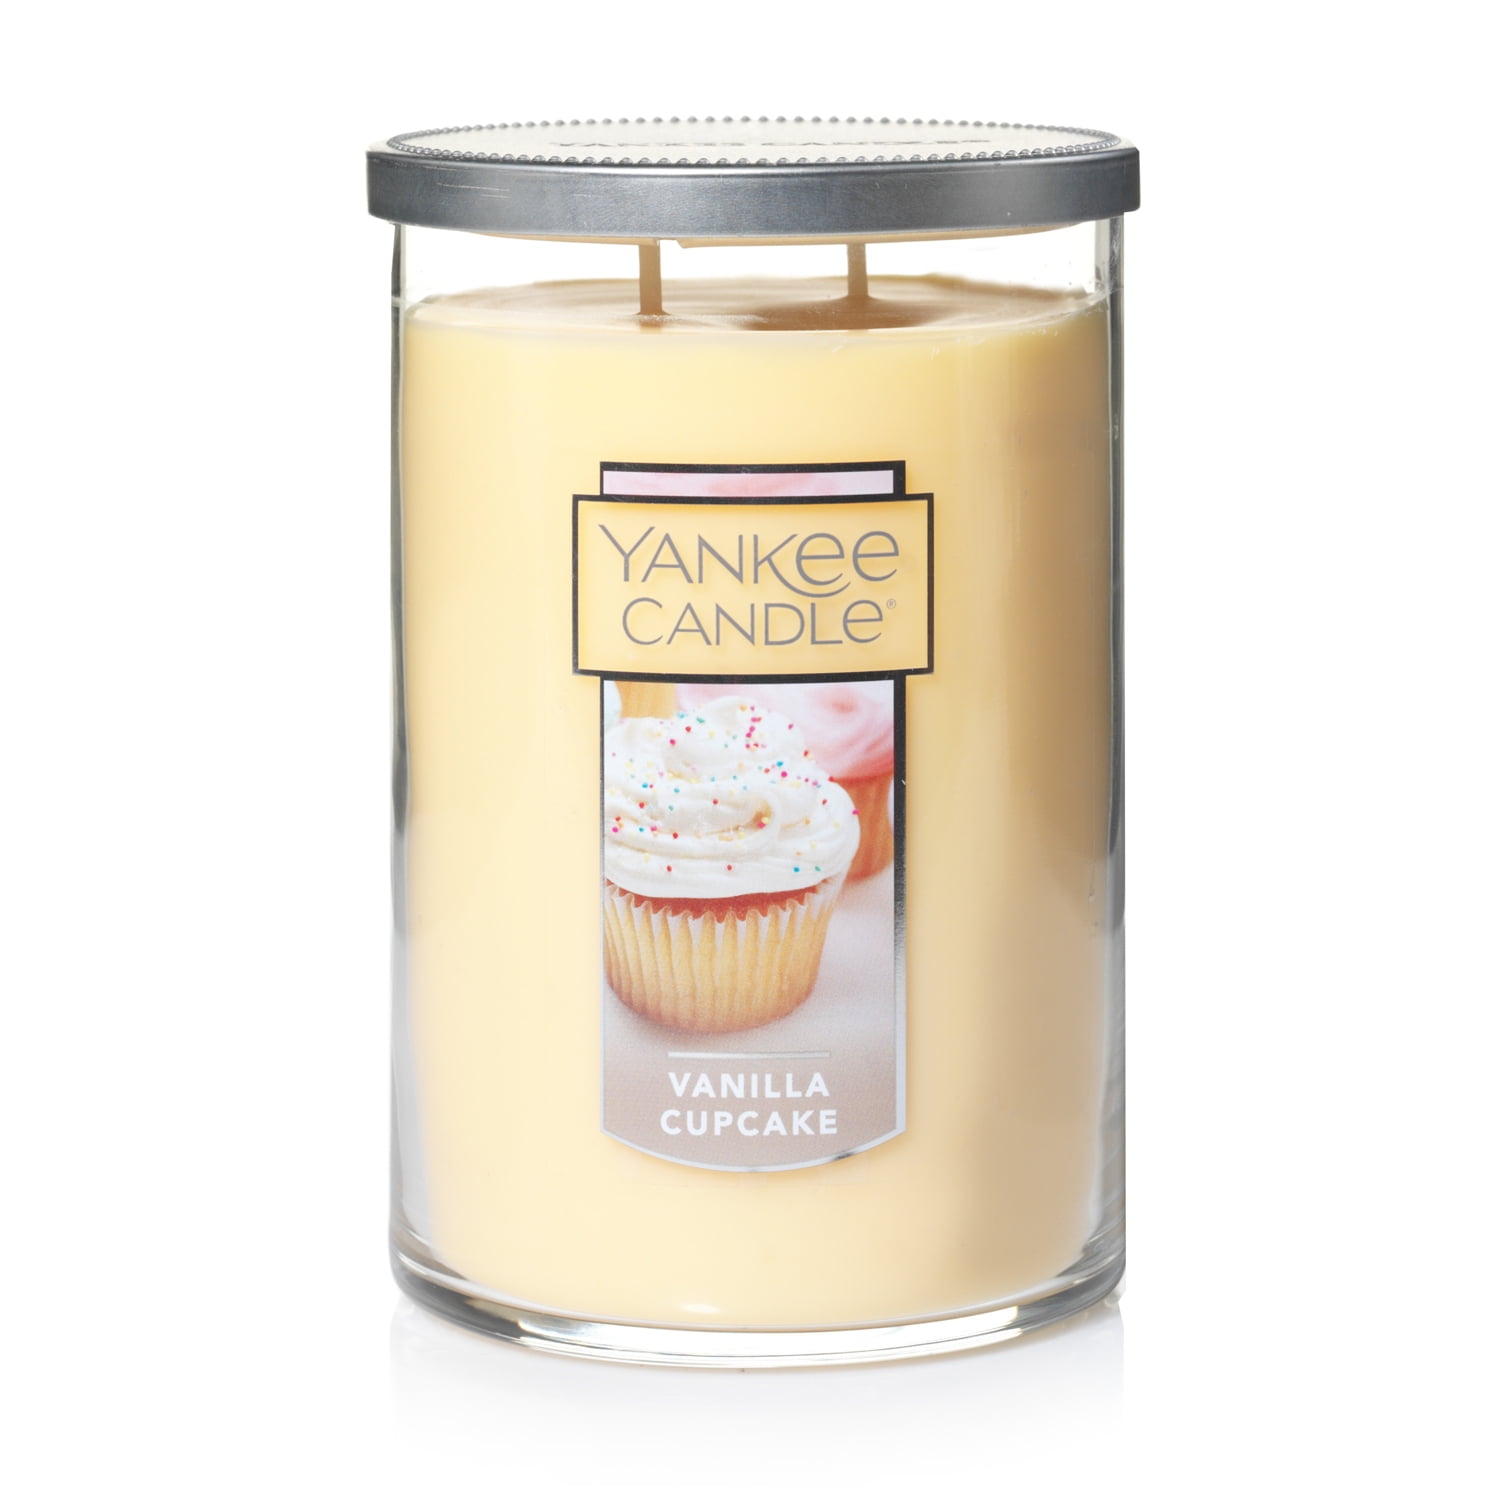 Yankee Candle Vanilla Cupcake - Large 2-Wick Tumbler Candle - Walmart.com